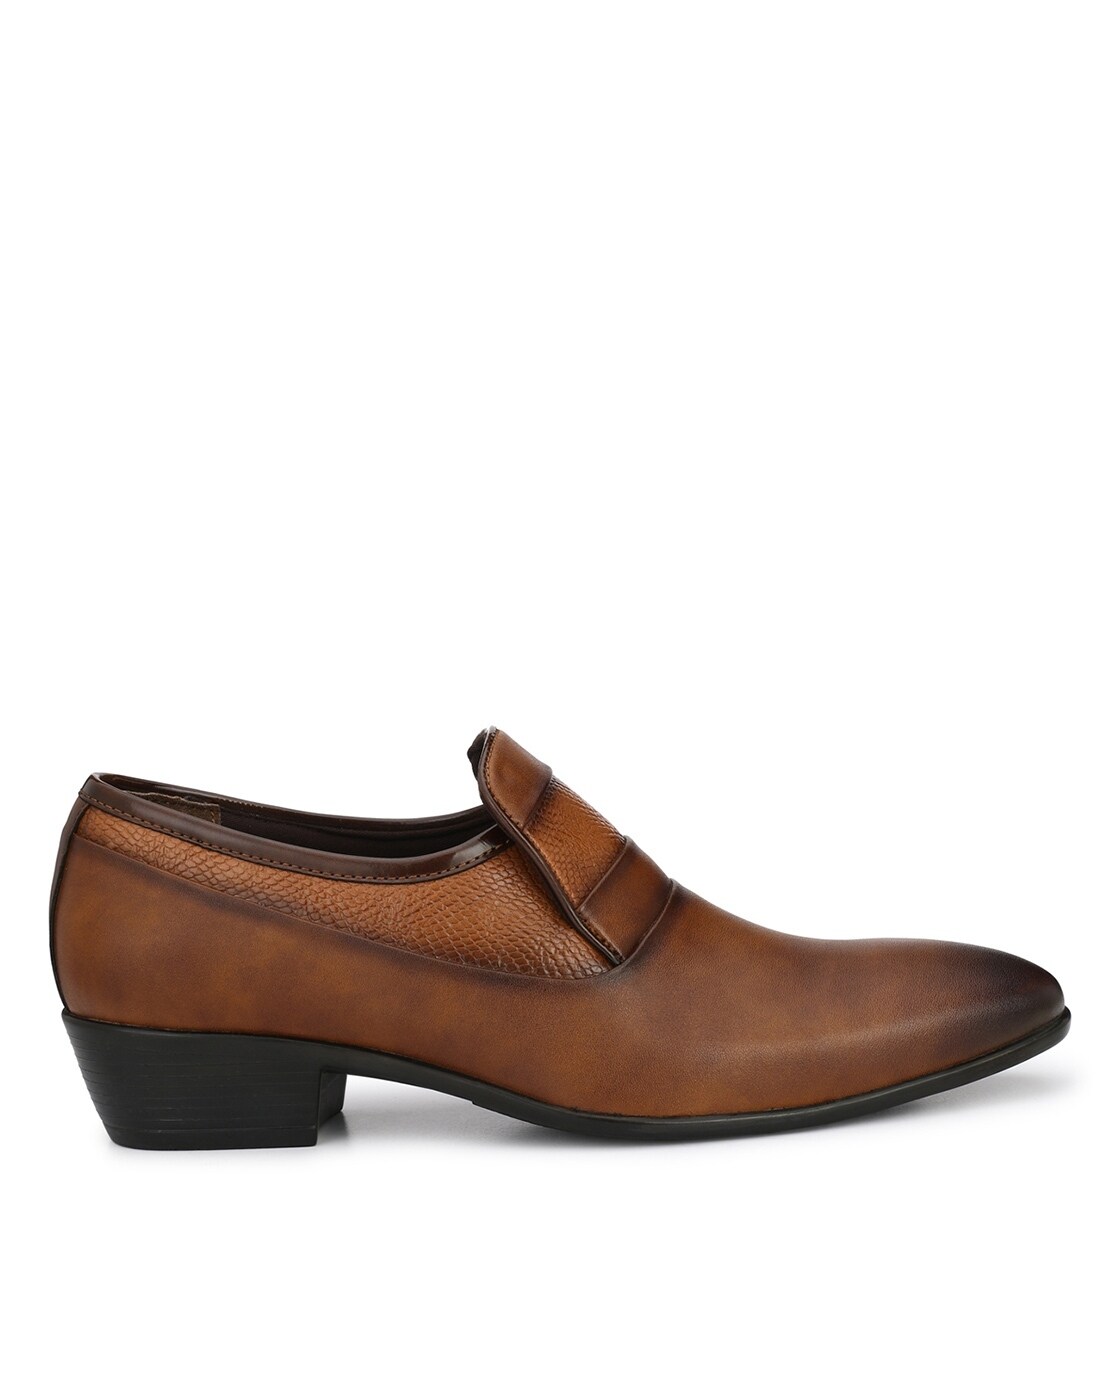 Crocodile pattern Men's Shoes Pointed Toe Formal Shoes 6cm Hidden Heels  Genuine Leather Dress Shoes Men Oxfords Size 37-44 - OnshopDeals.Com